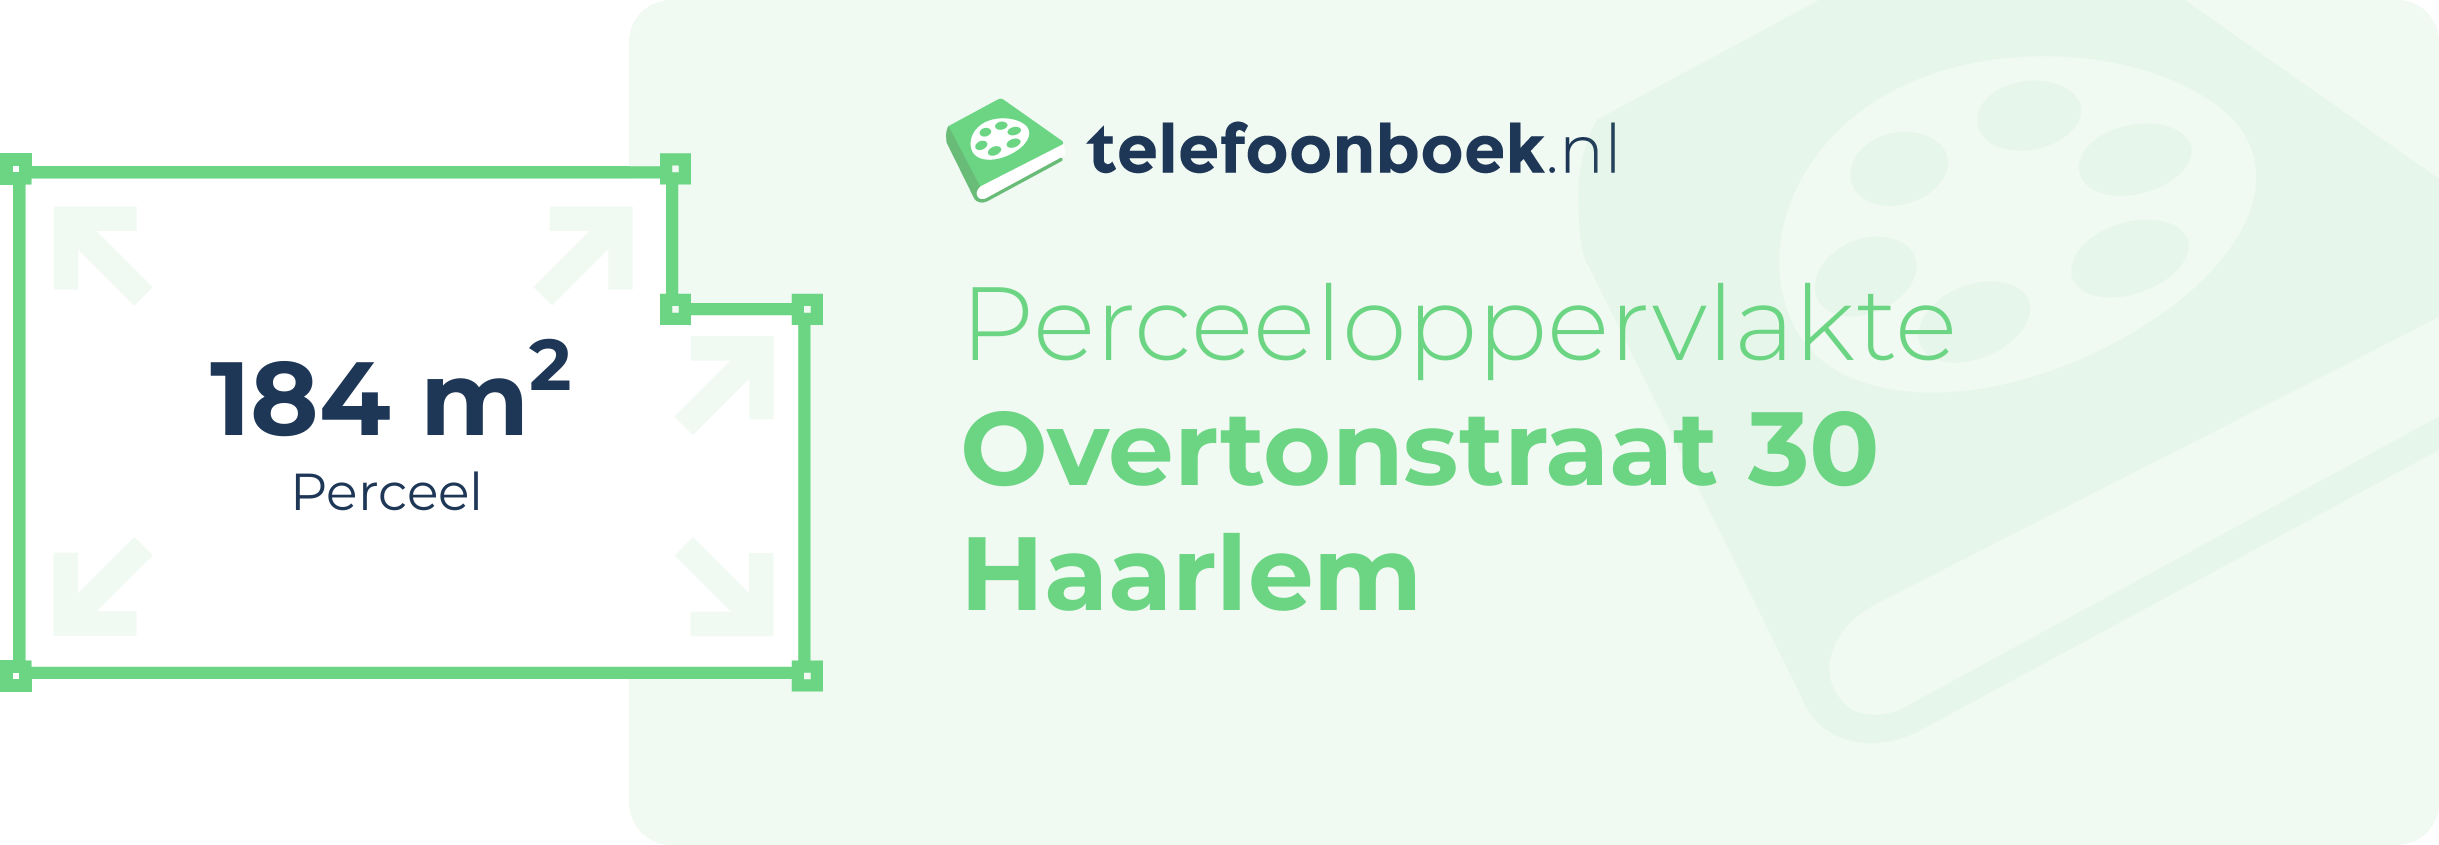 Perceeloppervlakte Overtonstraat 30 Haarlem